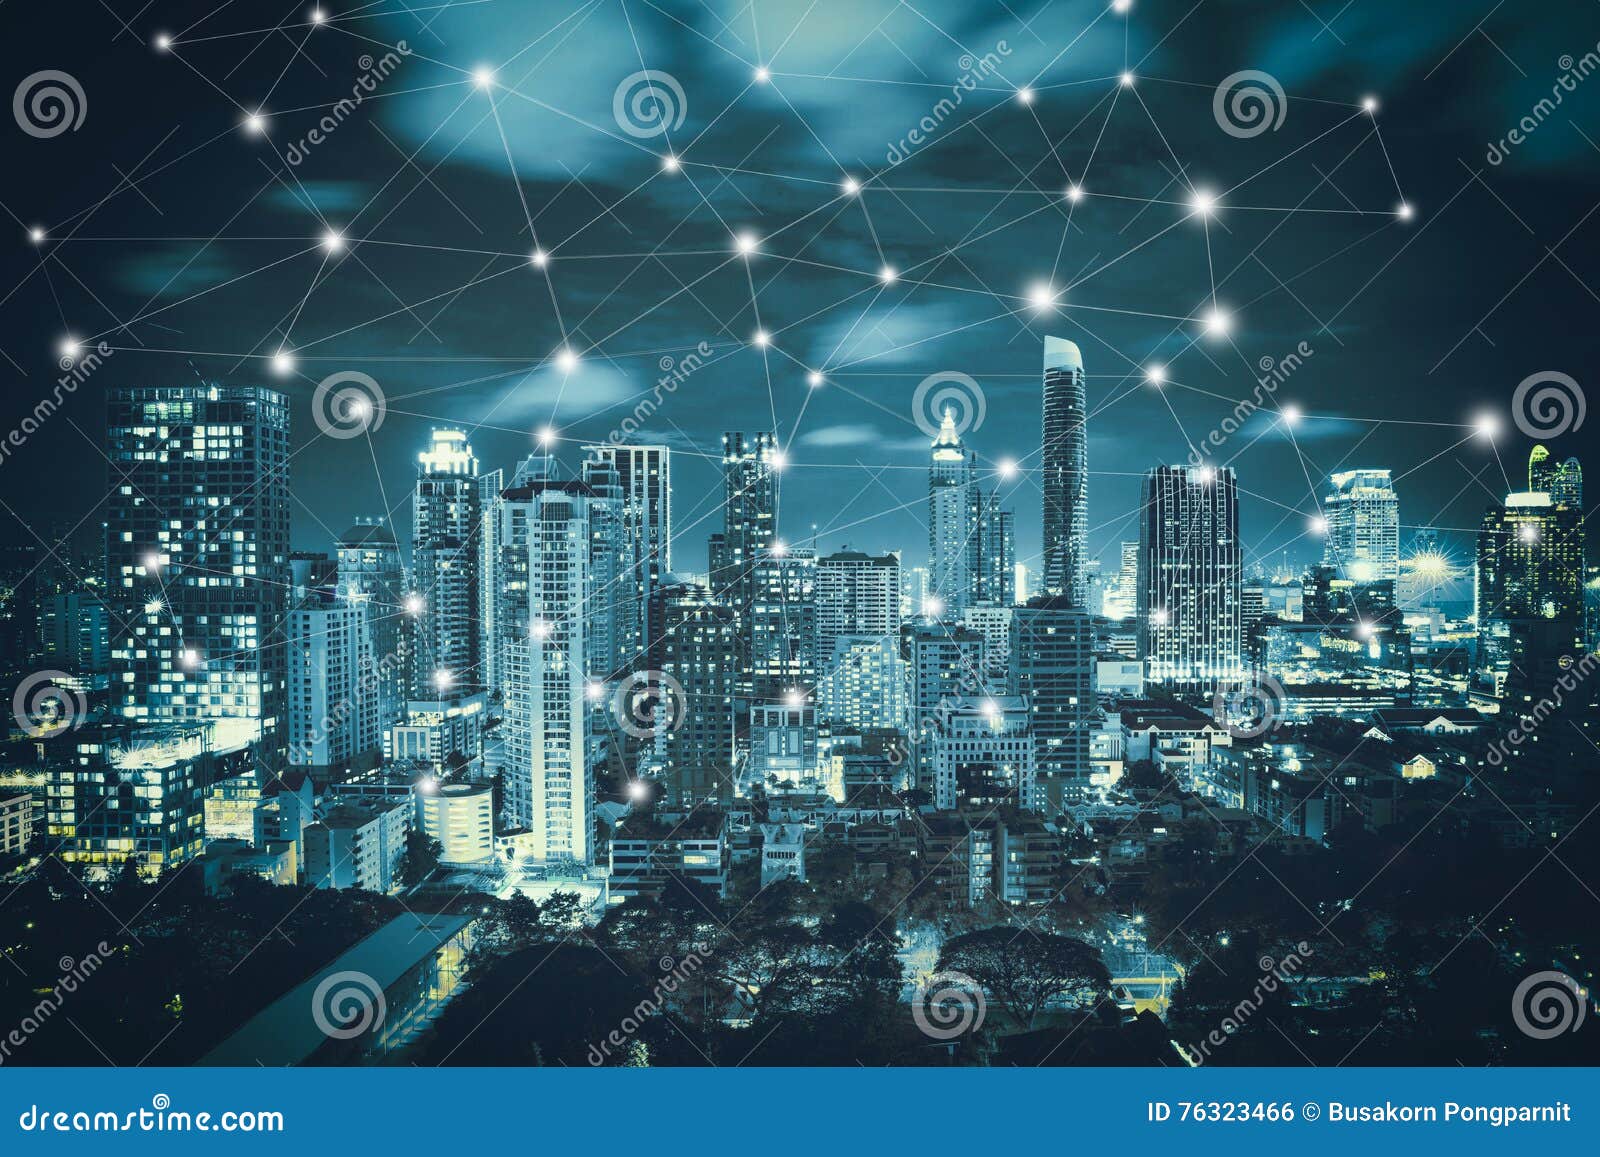 smart city and wireless